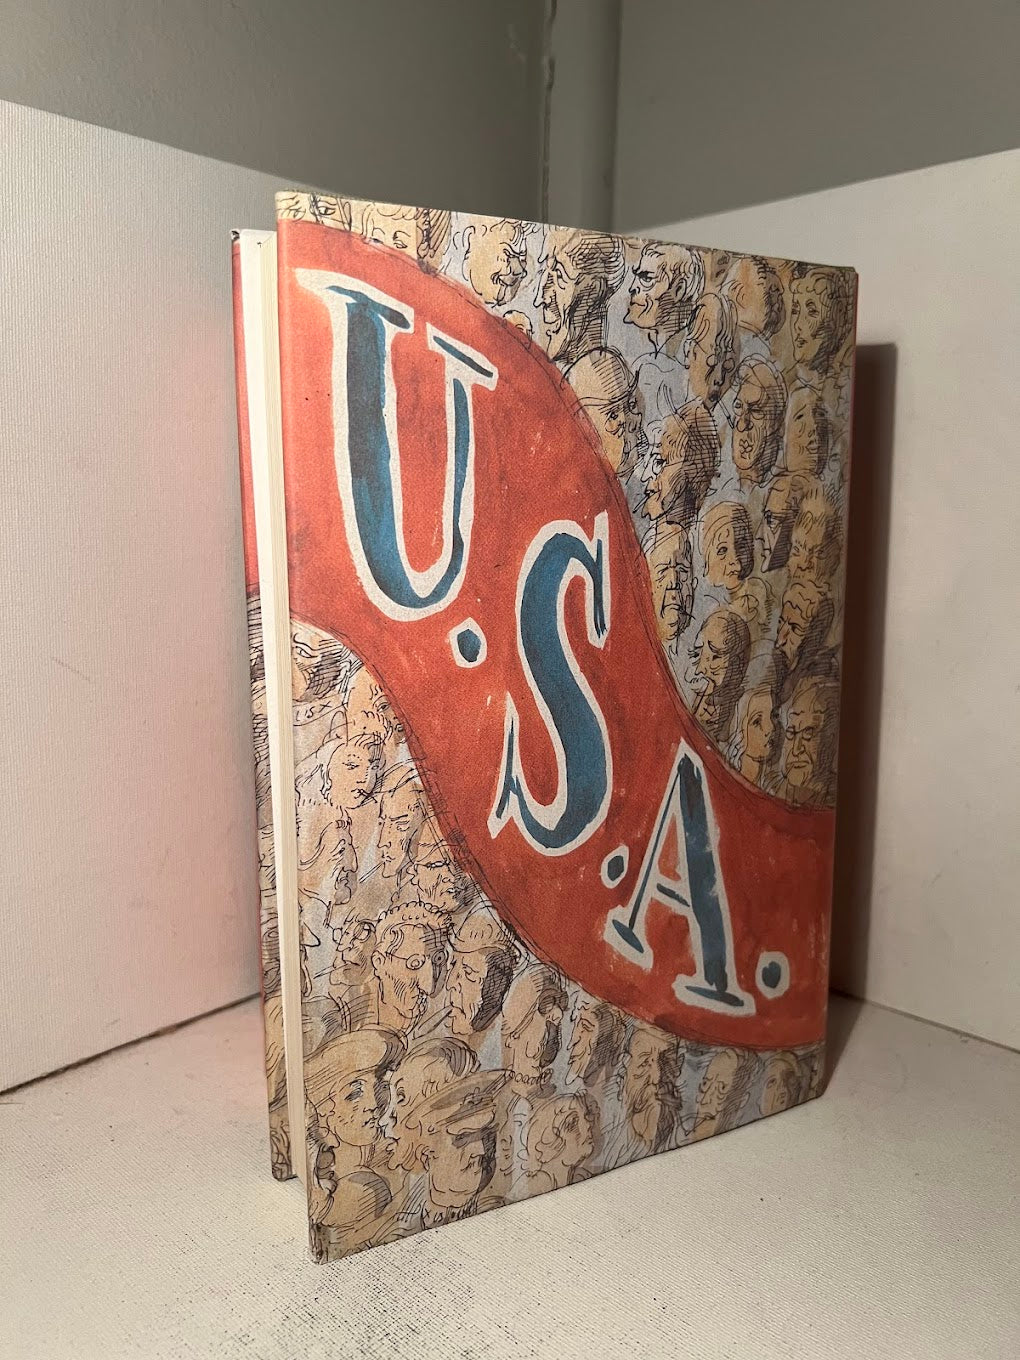 U.S.A. Trilogy by John Dos Passos